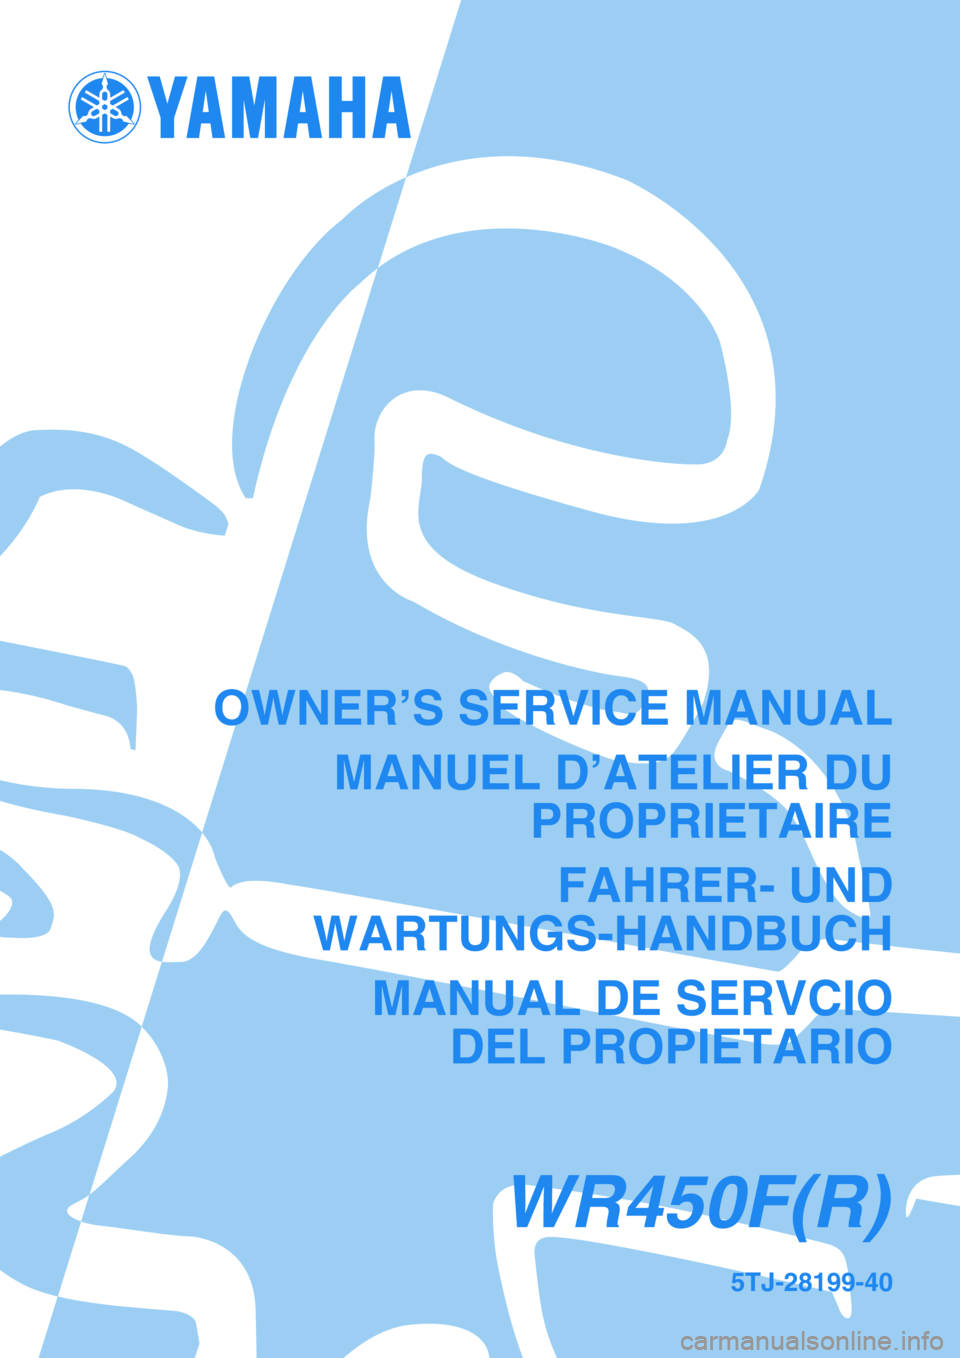 YAMAHA WR 450F 2003  Manuale de Empleo (in Spanish) 5TJ-28199-40
WR450F(R)
OWNER’S SERVICE MANUAL
MANUEL D’ATELIER DU
PROPRIETAIRE
FAHRER- UND
WARTUNGS-HANDBUCH
MANUAL DE SERVCIO
DEL PROPIETARIO 